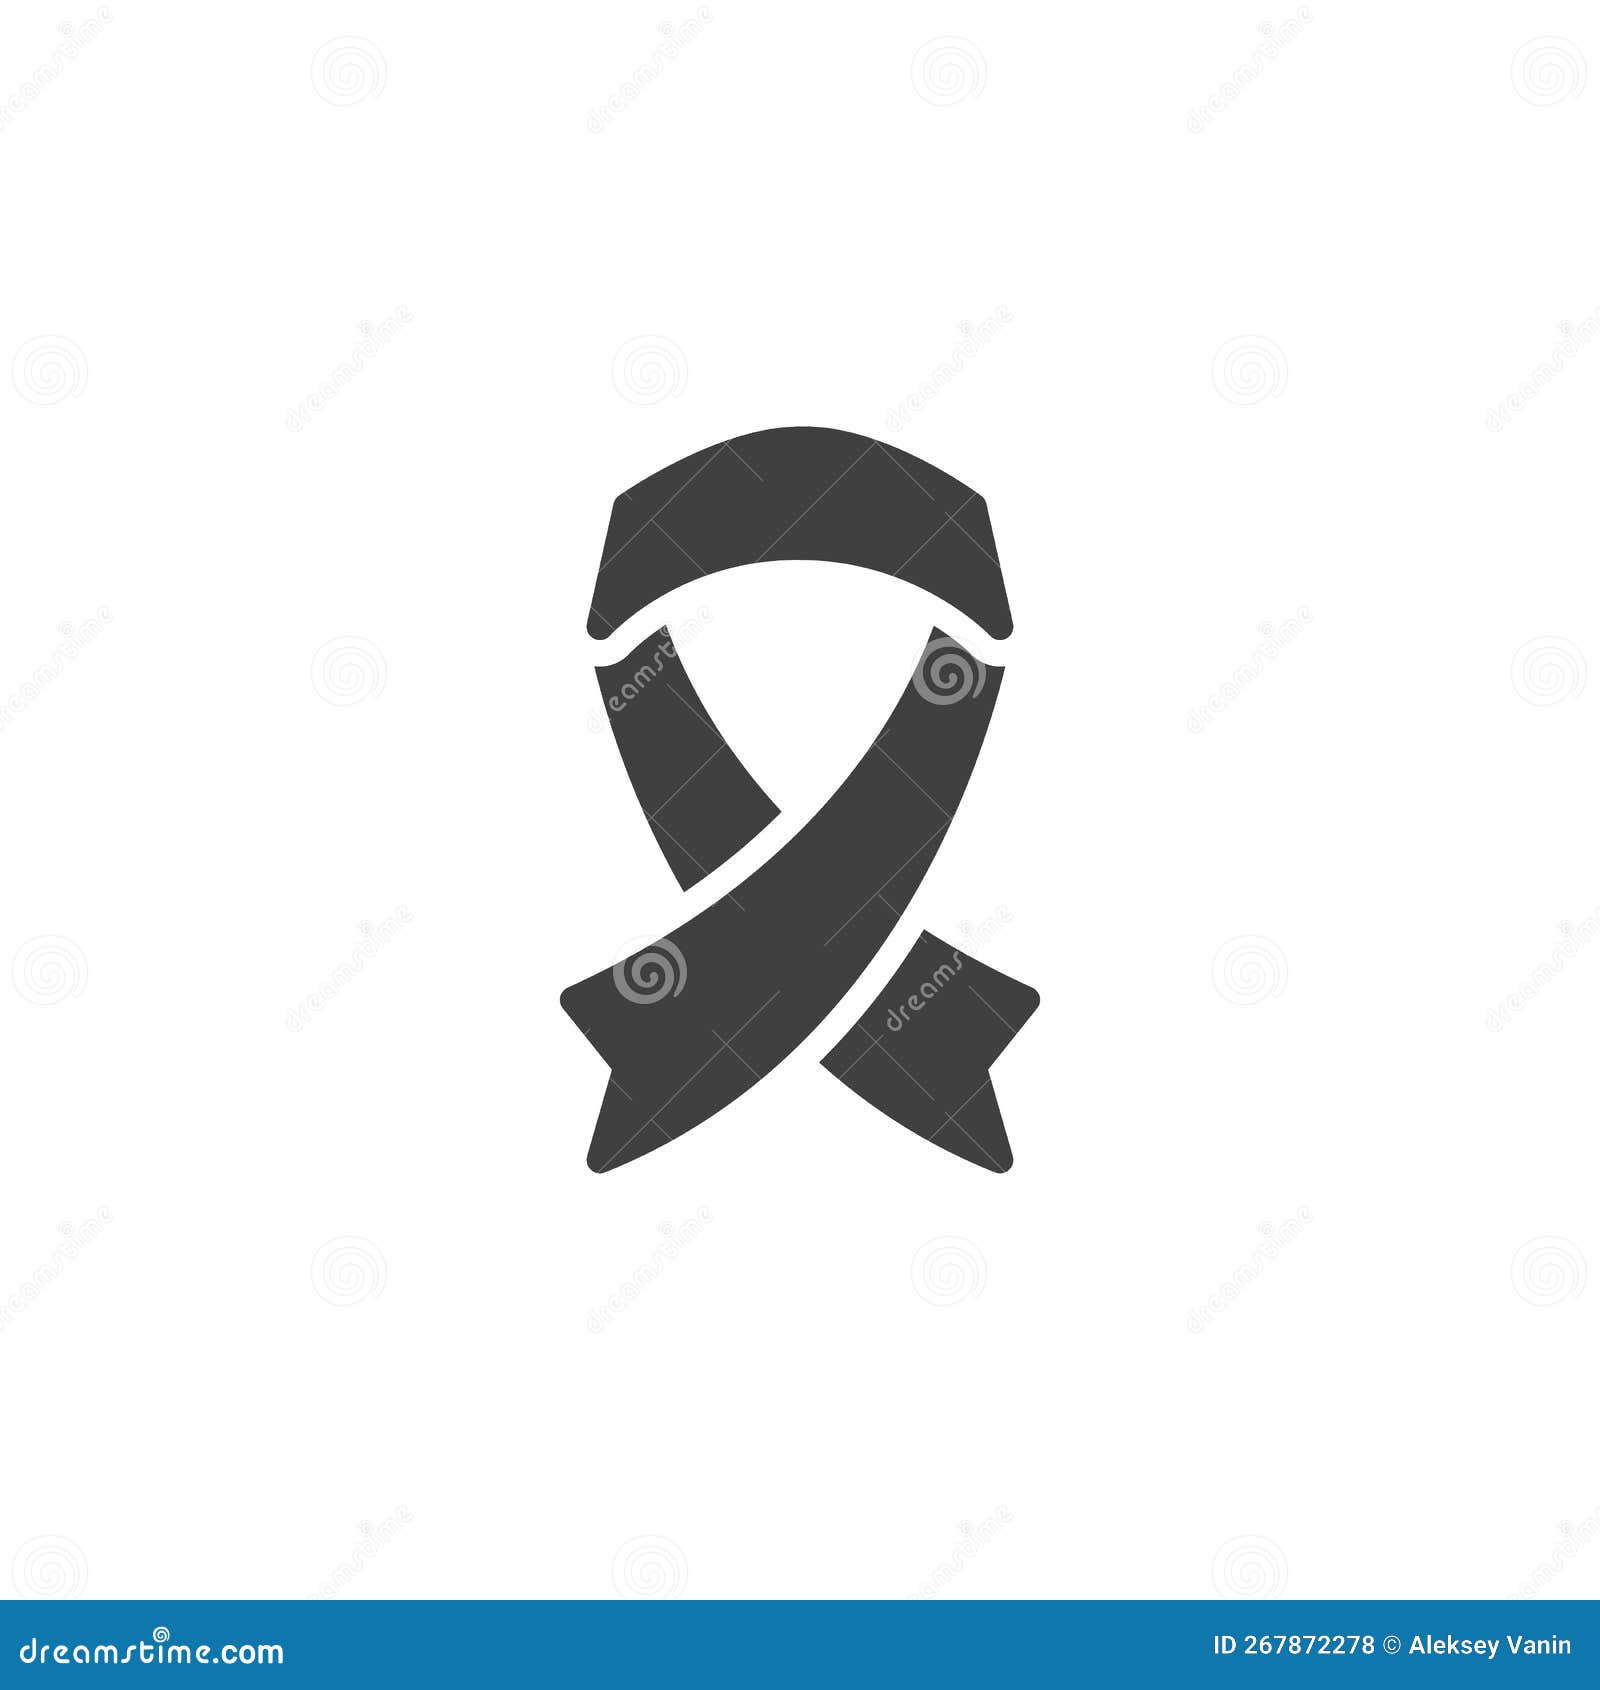 Awareness Ribbon Vector Icon Stock Illustration Illustration Of Awareness Pictogram 267872278 6779